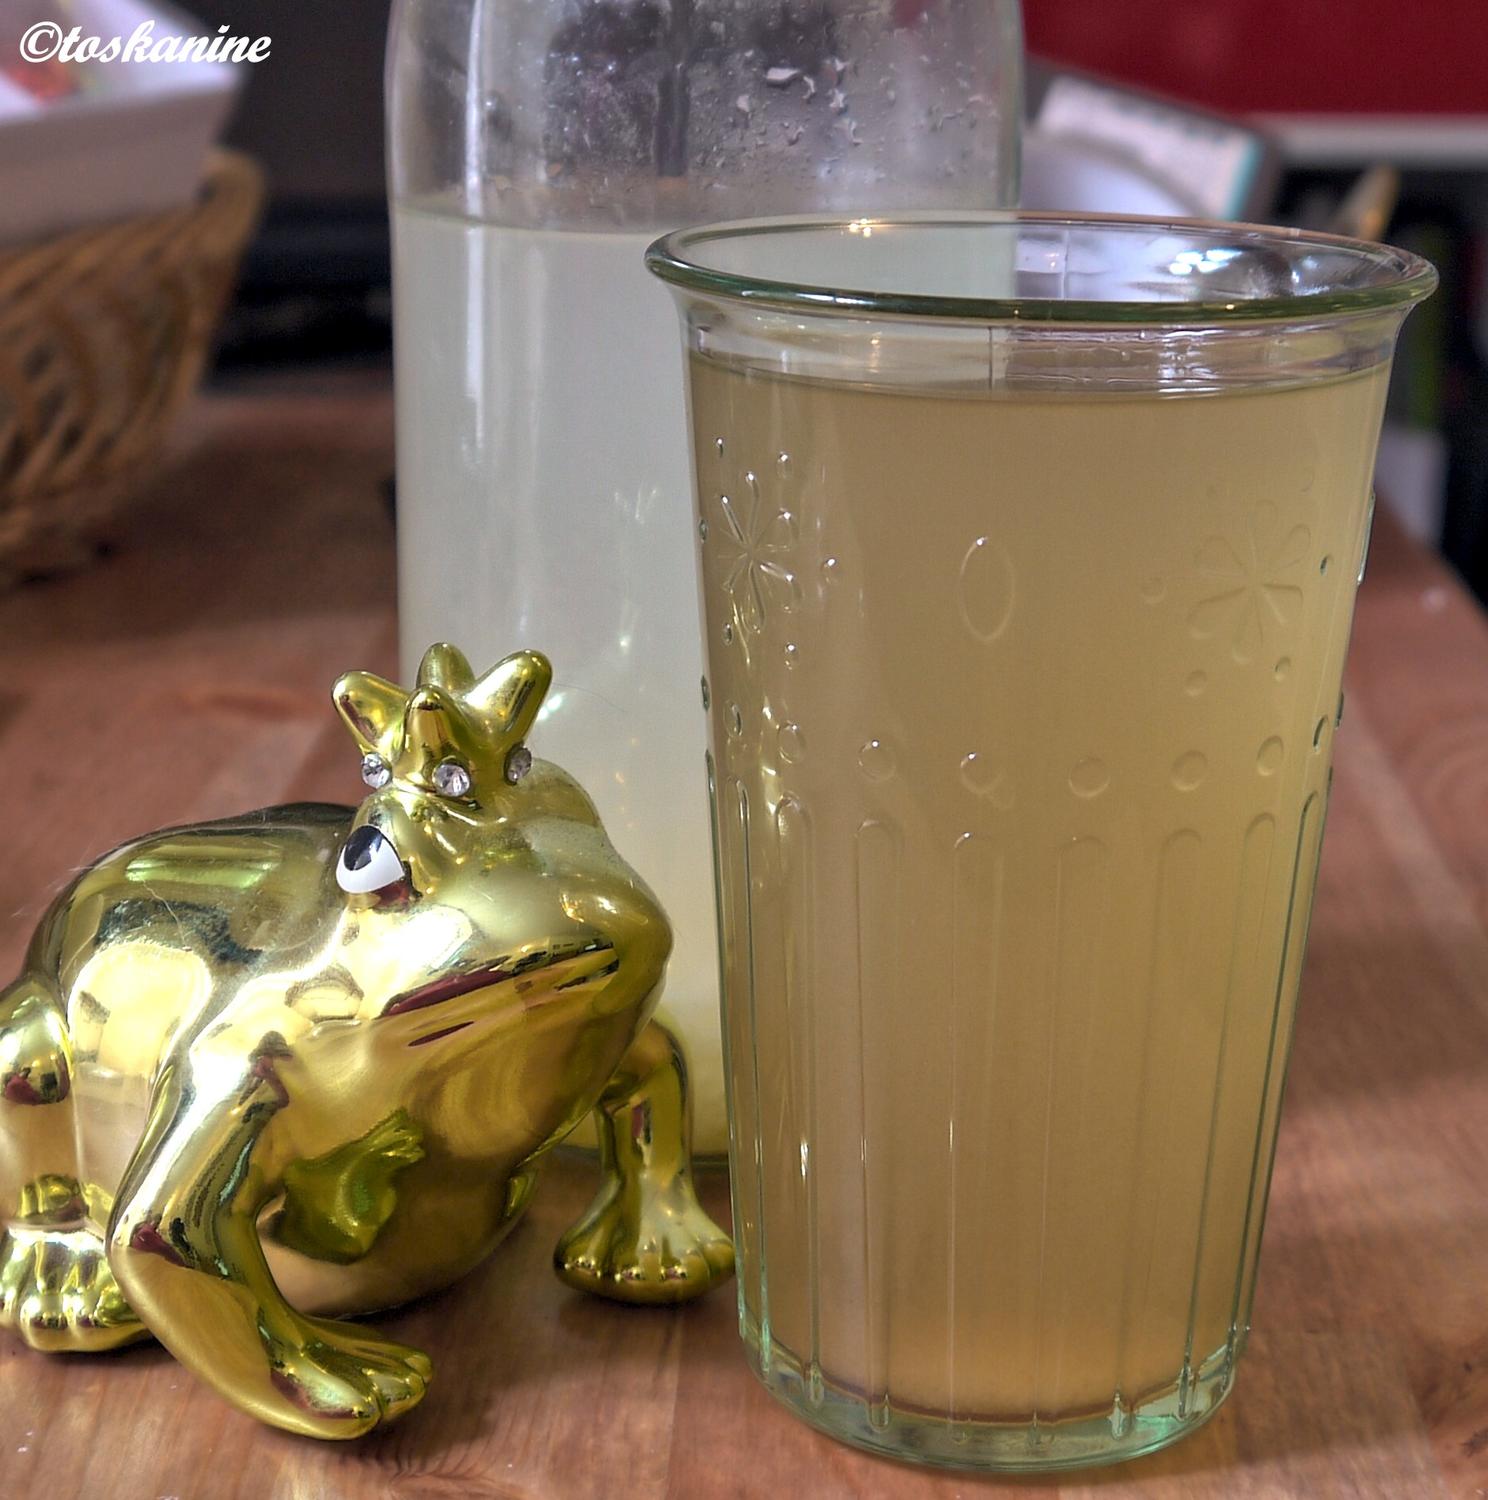 Ingwer-Zitronen-Limonade - Rezept mit Bild - kochbar.de